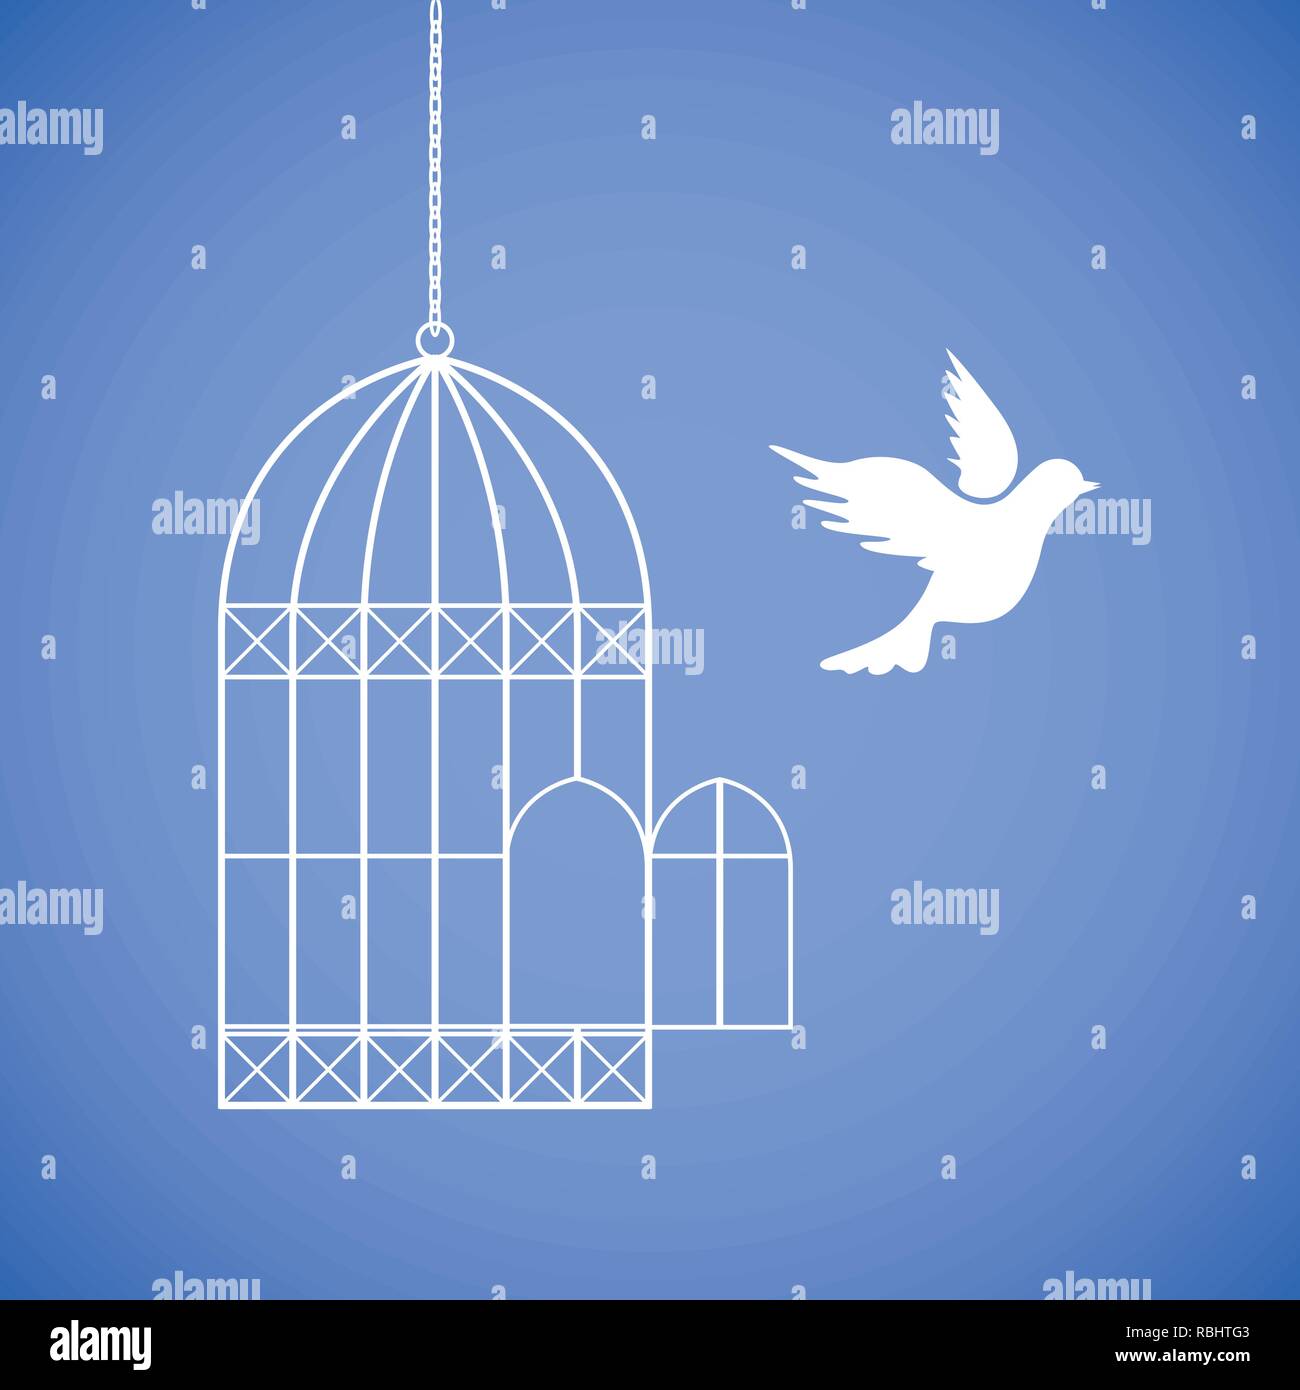 Weiße Taube fliegt aus dem Käfig Vektor-illustration EPS 10. Stock Vektor